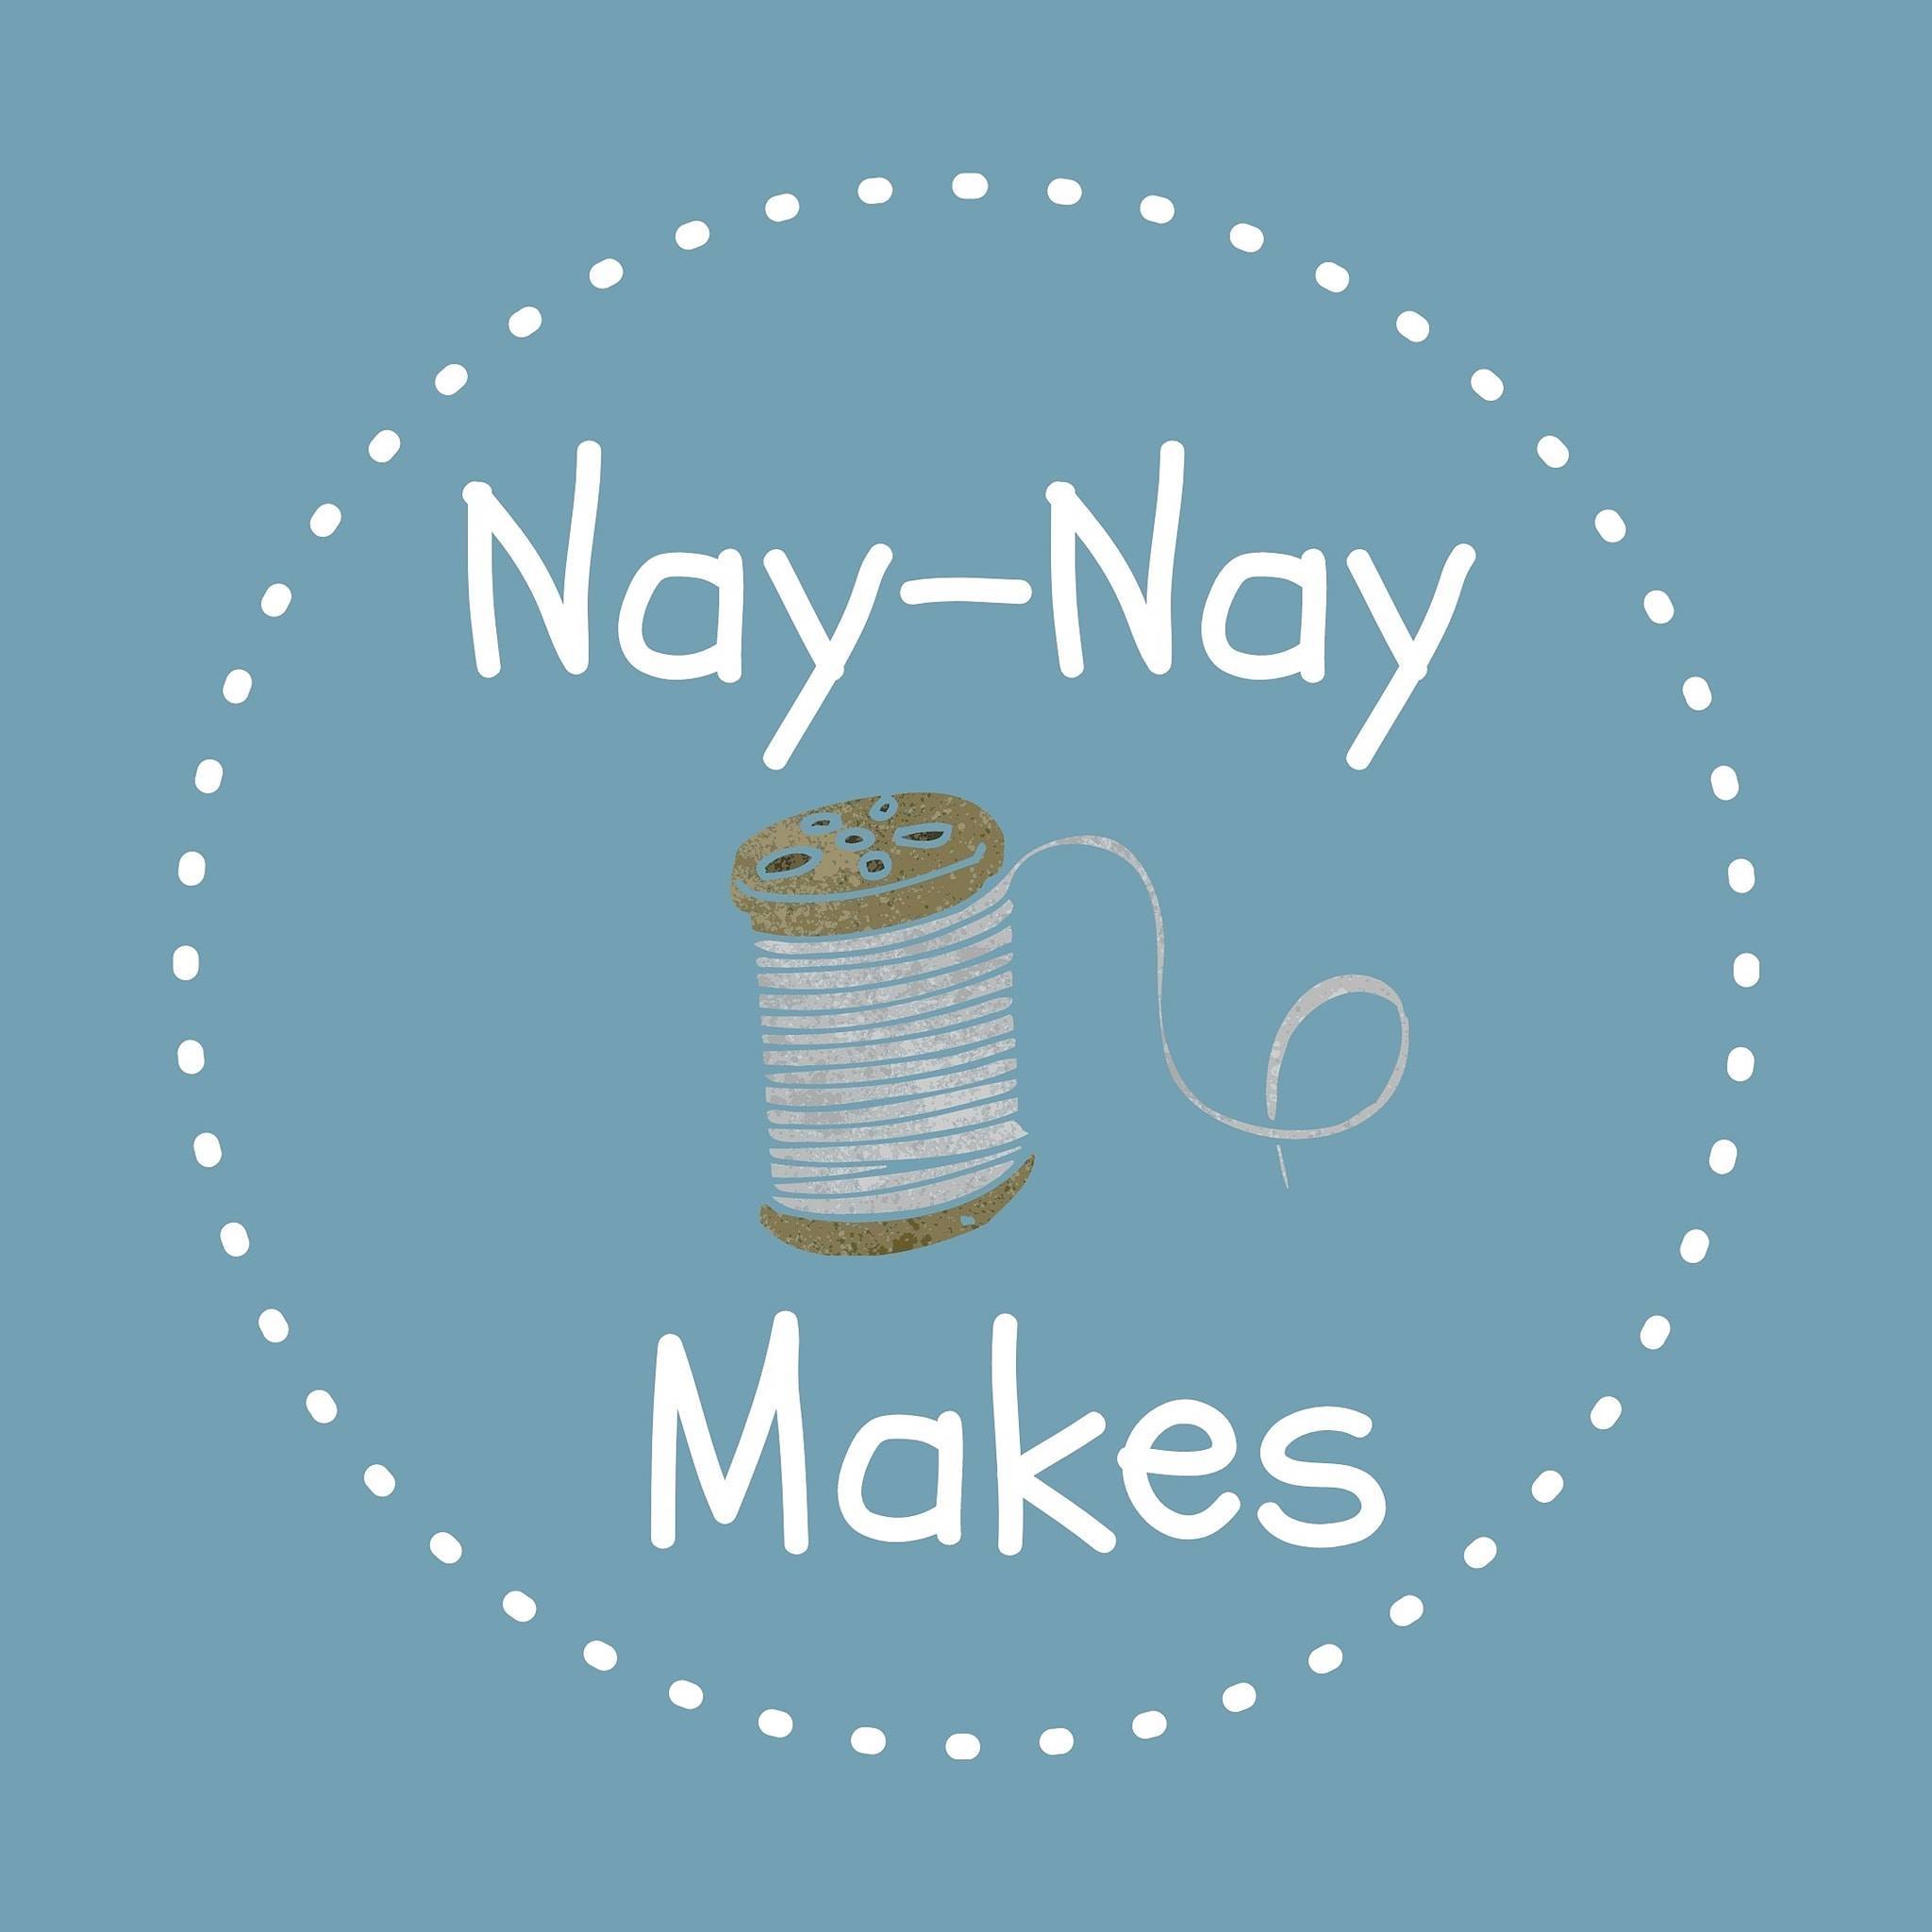 EXHIBITOR: Nay-Nay Makes